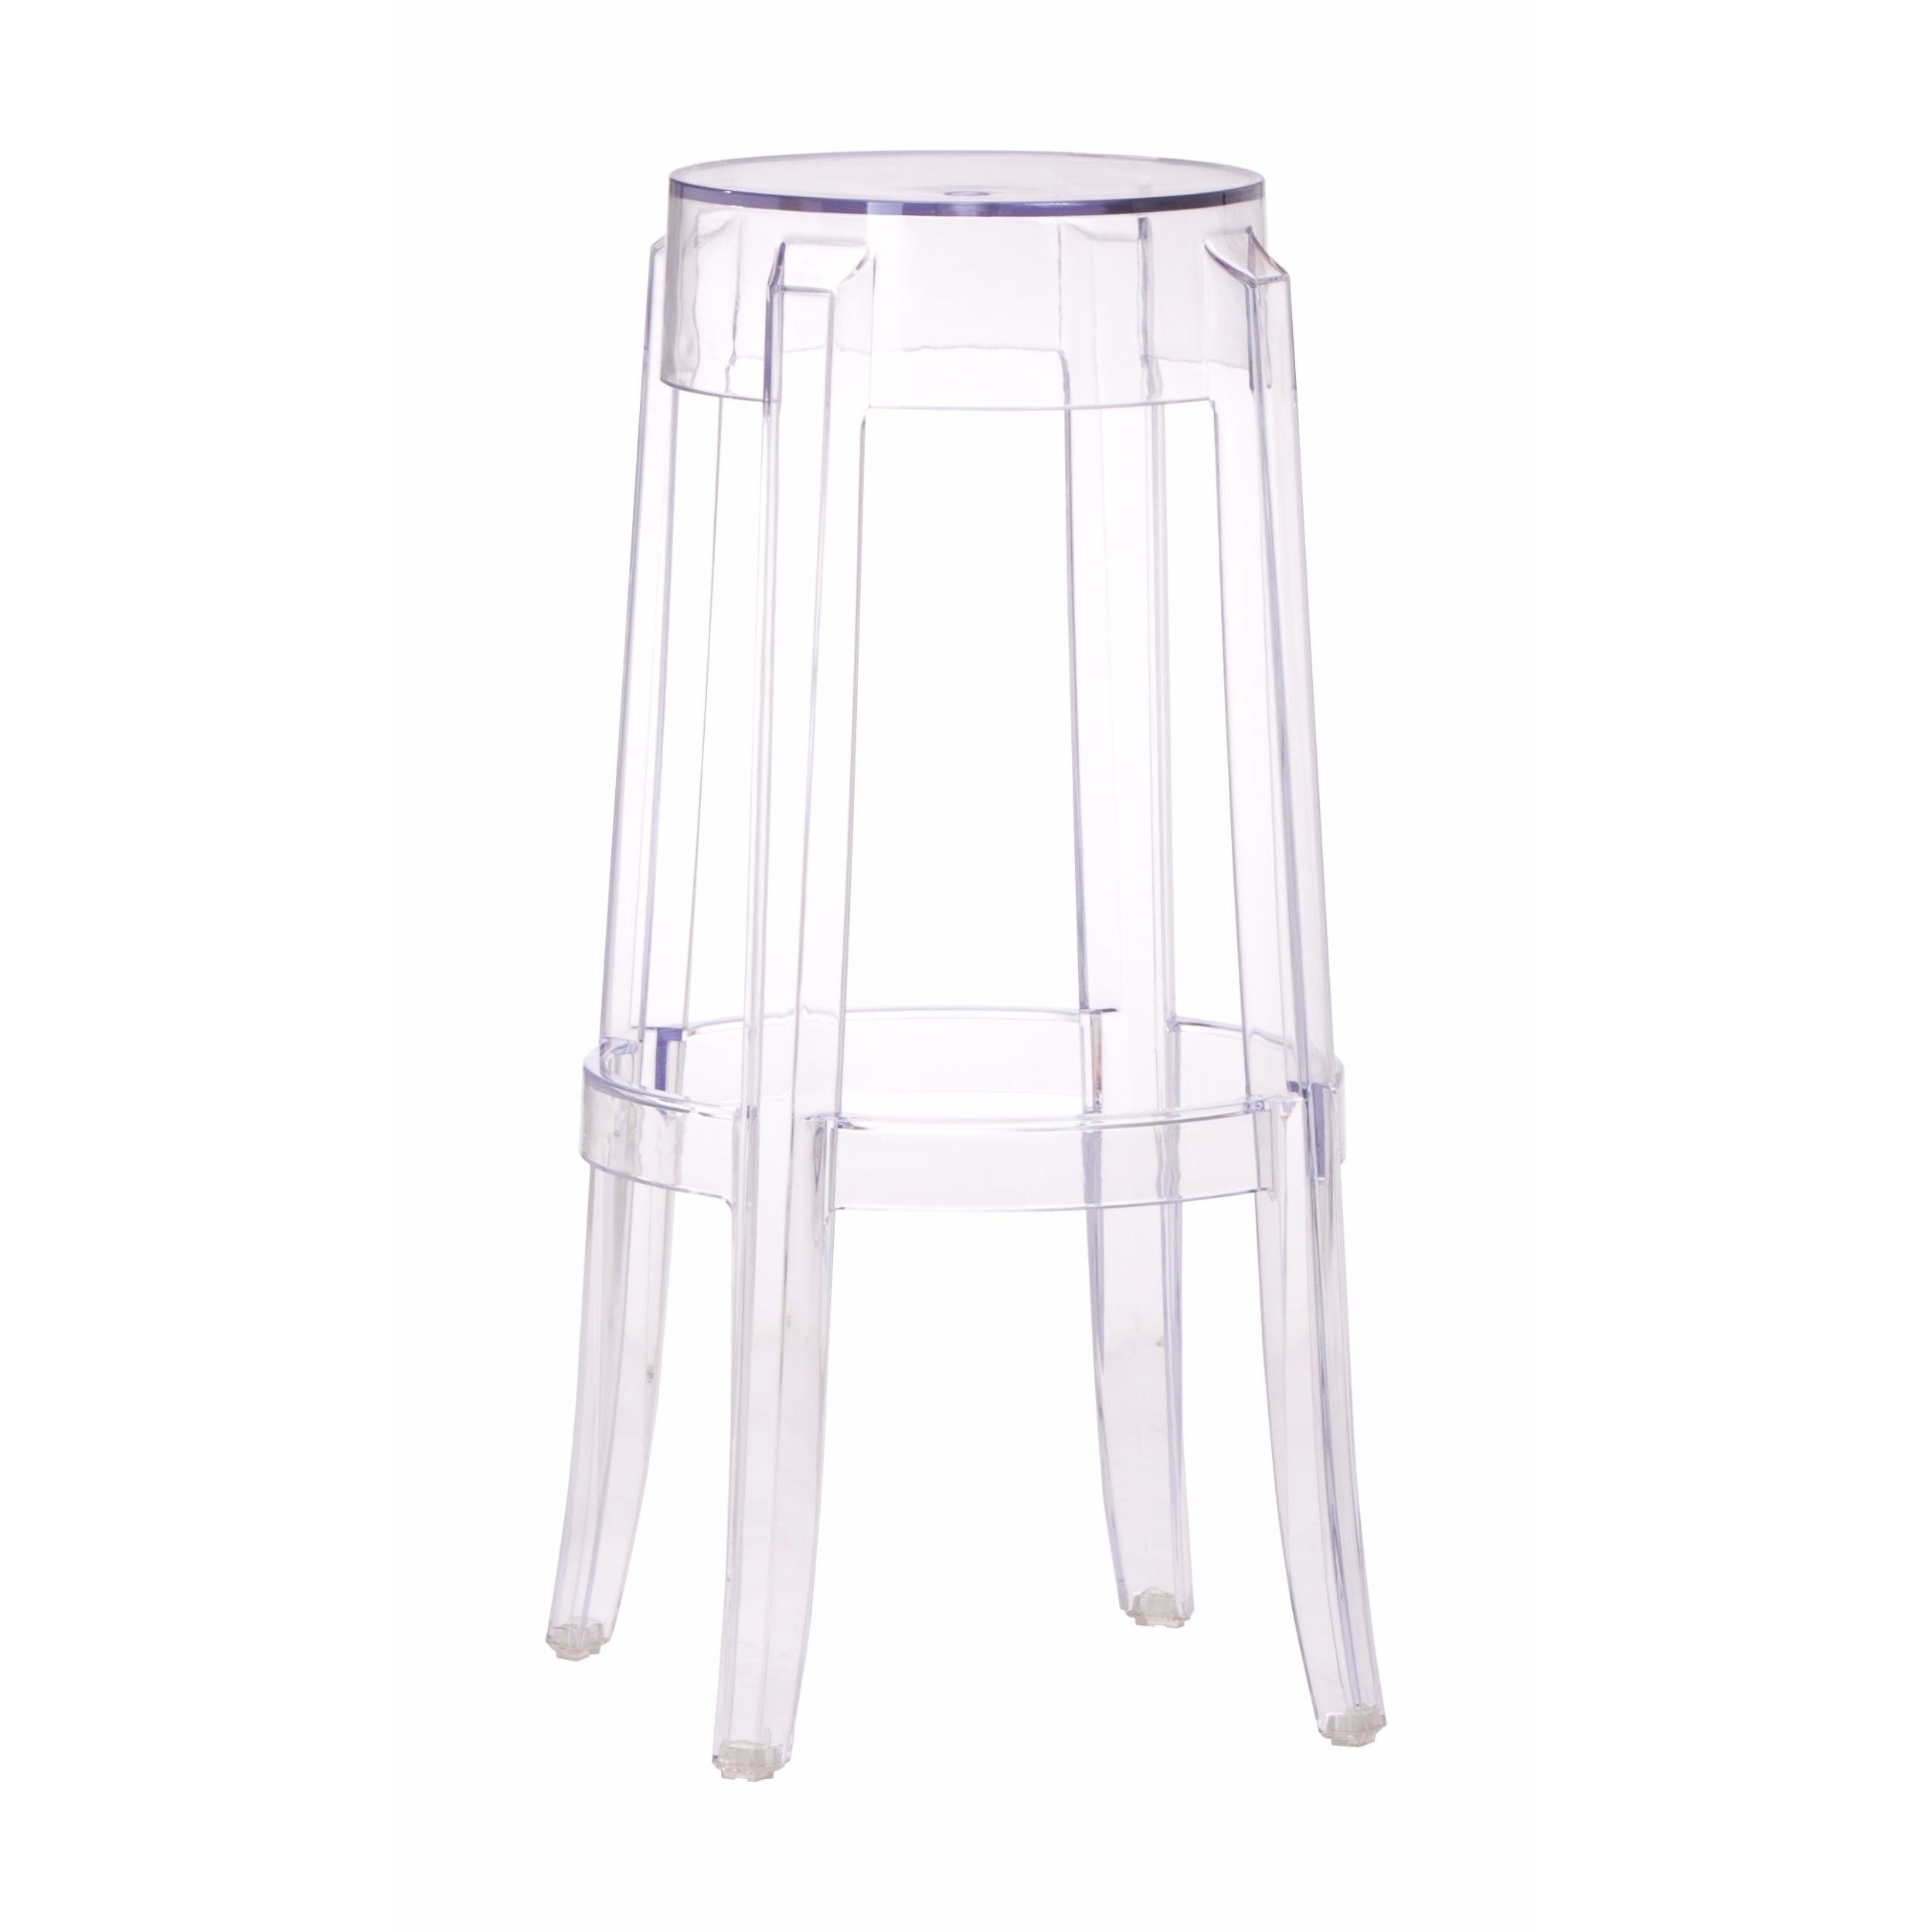 Anime transparent bar stool